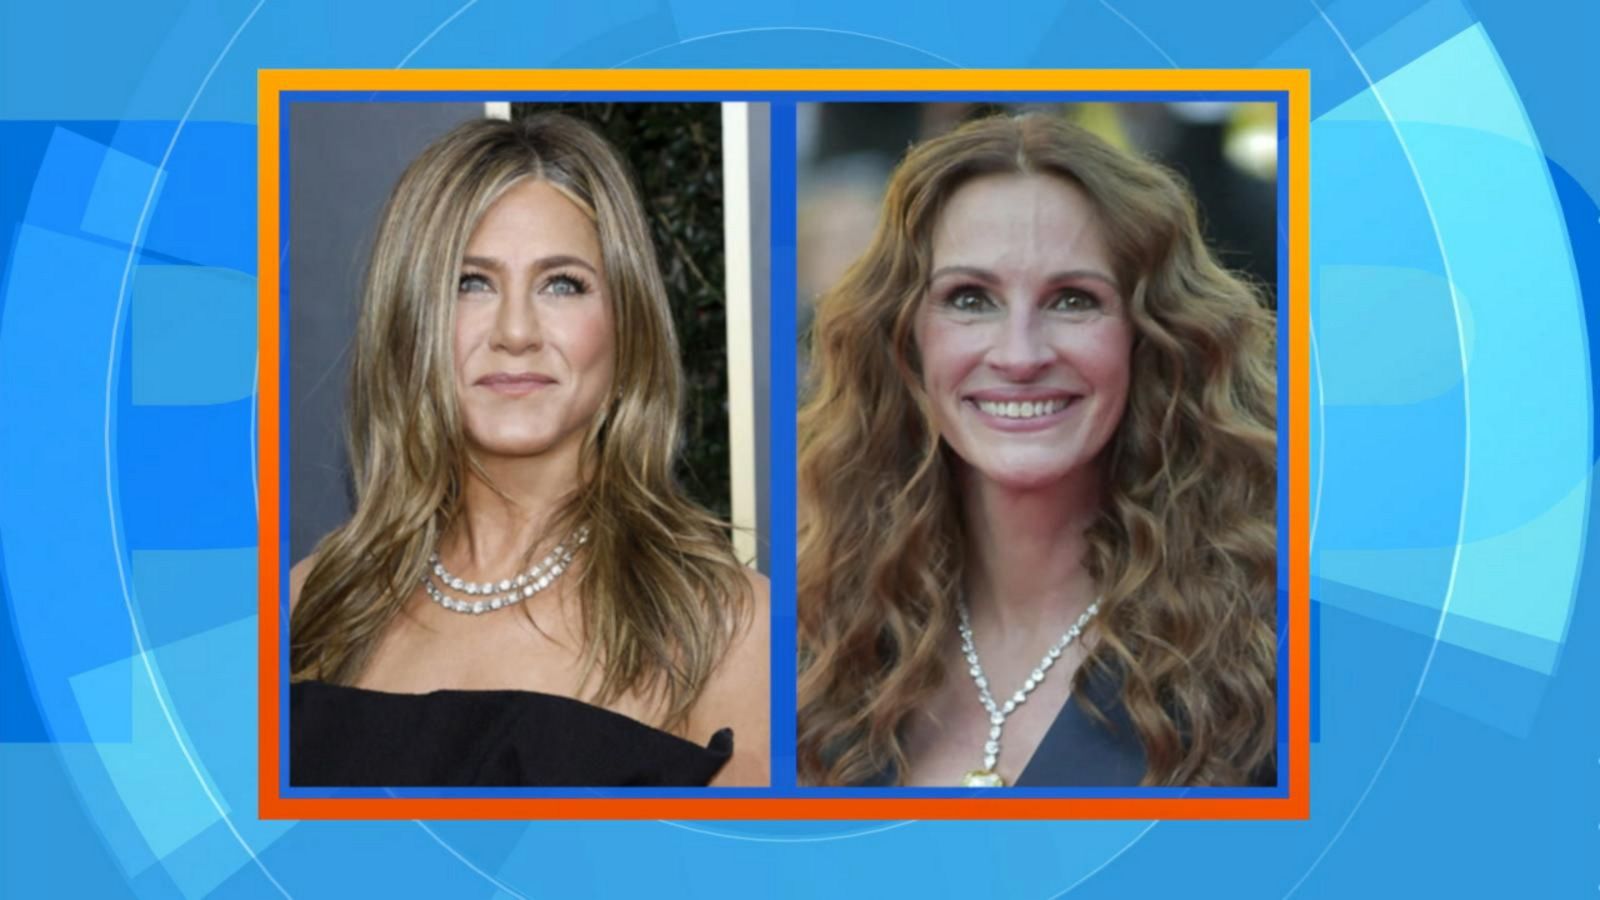 Julia Roberts, Jennifer Aniston team up for new movie - Good